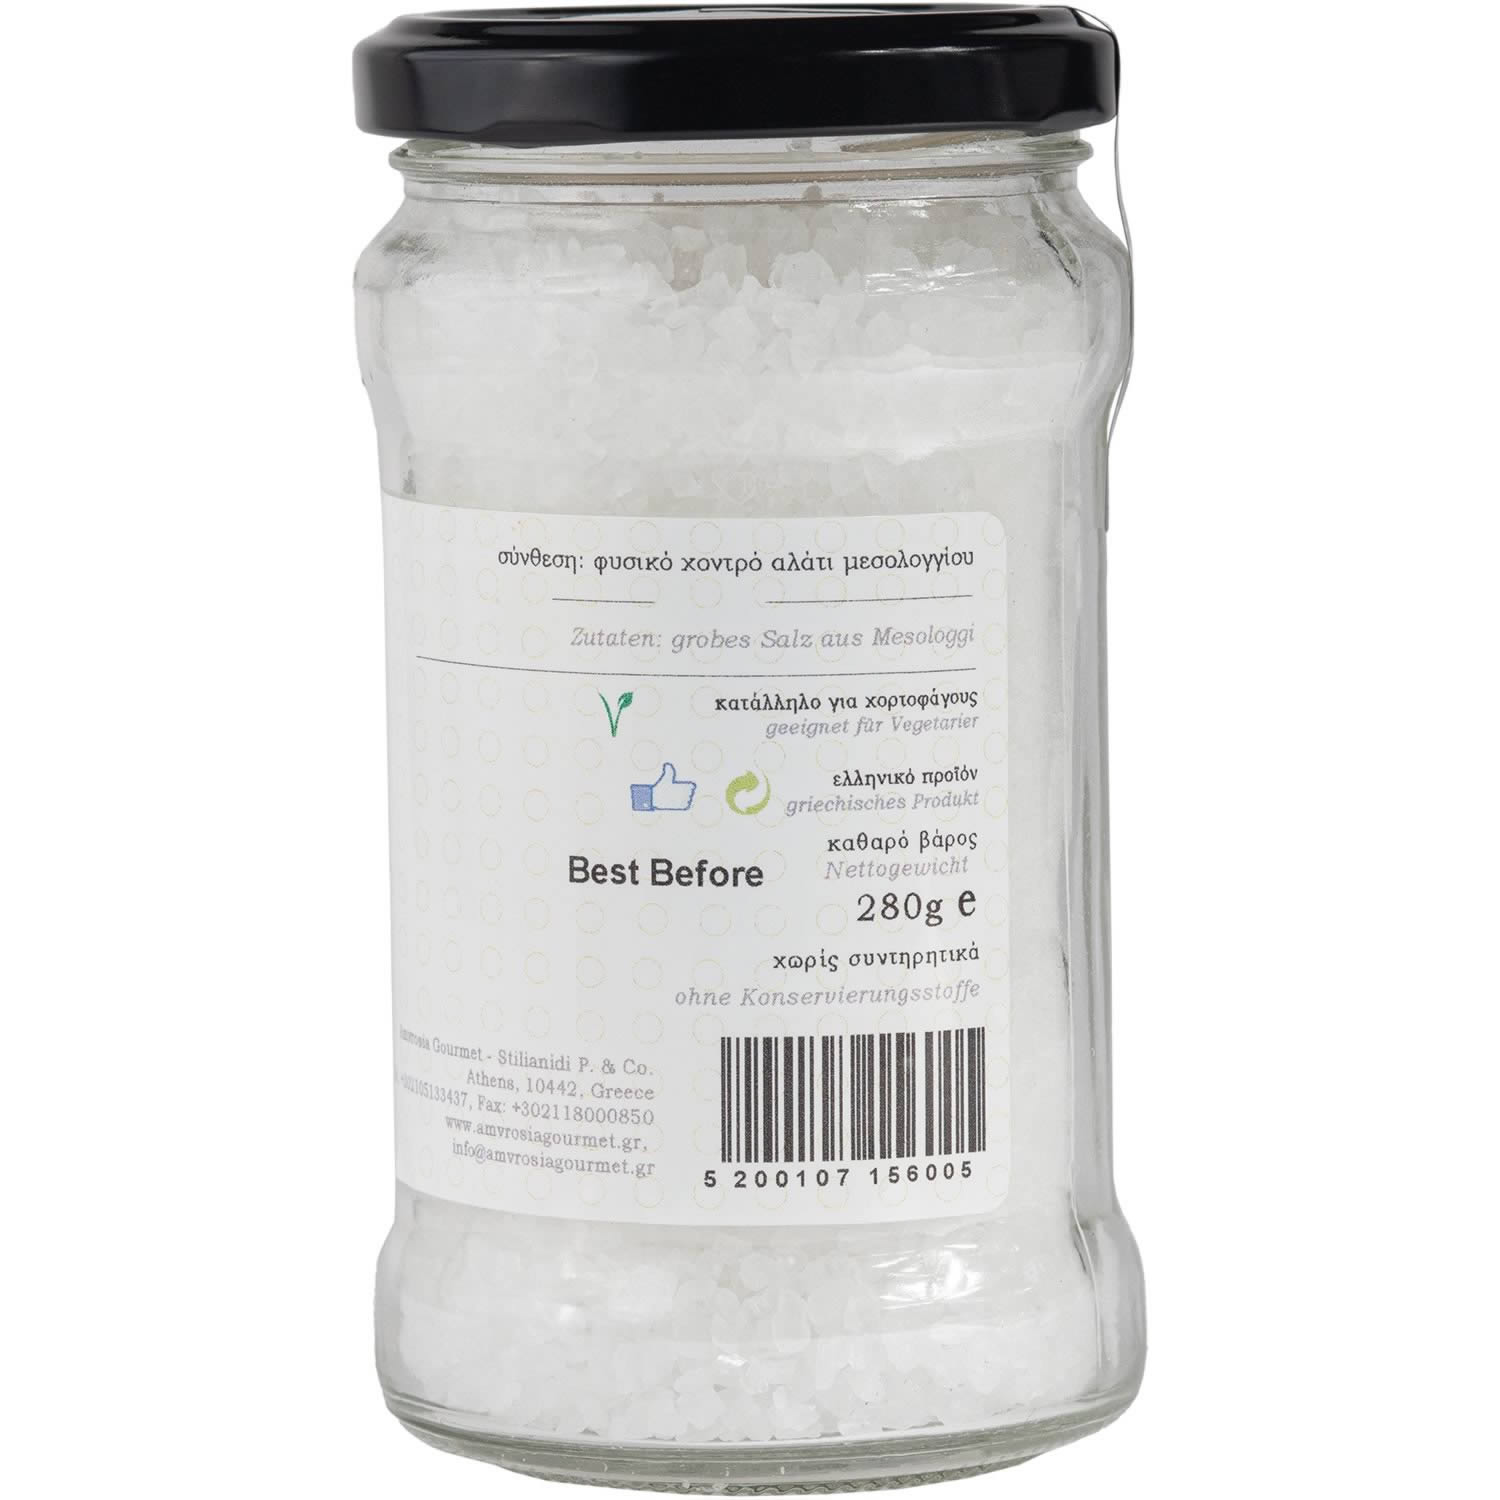 Salz aus Mesologgi 280 g